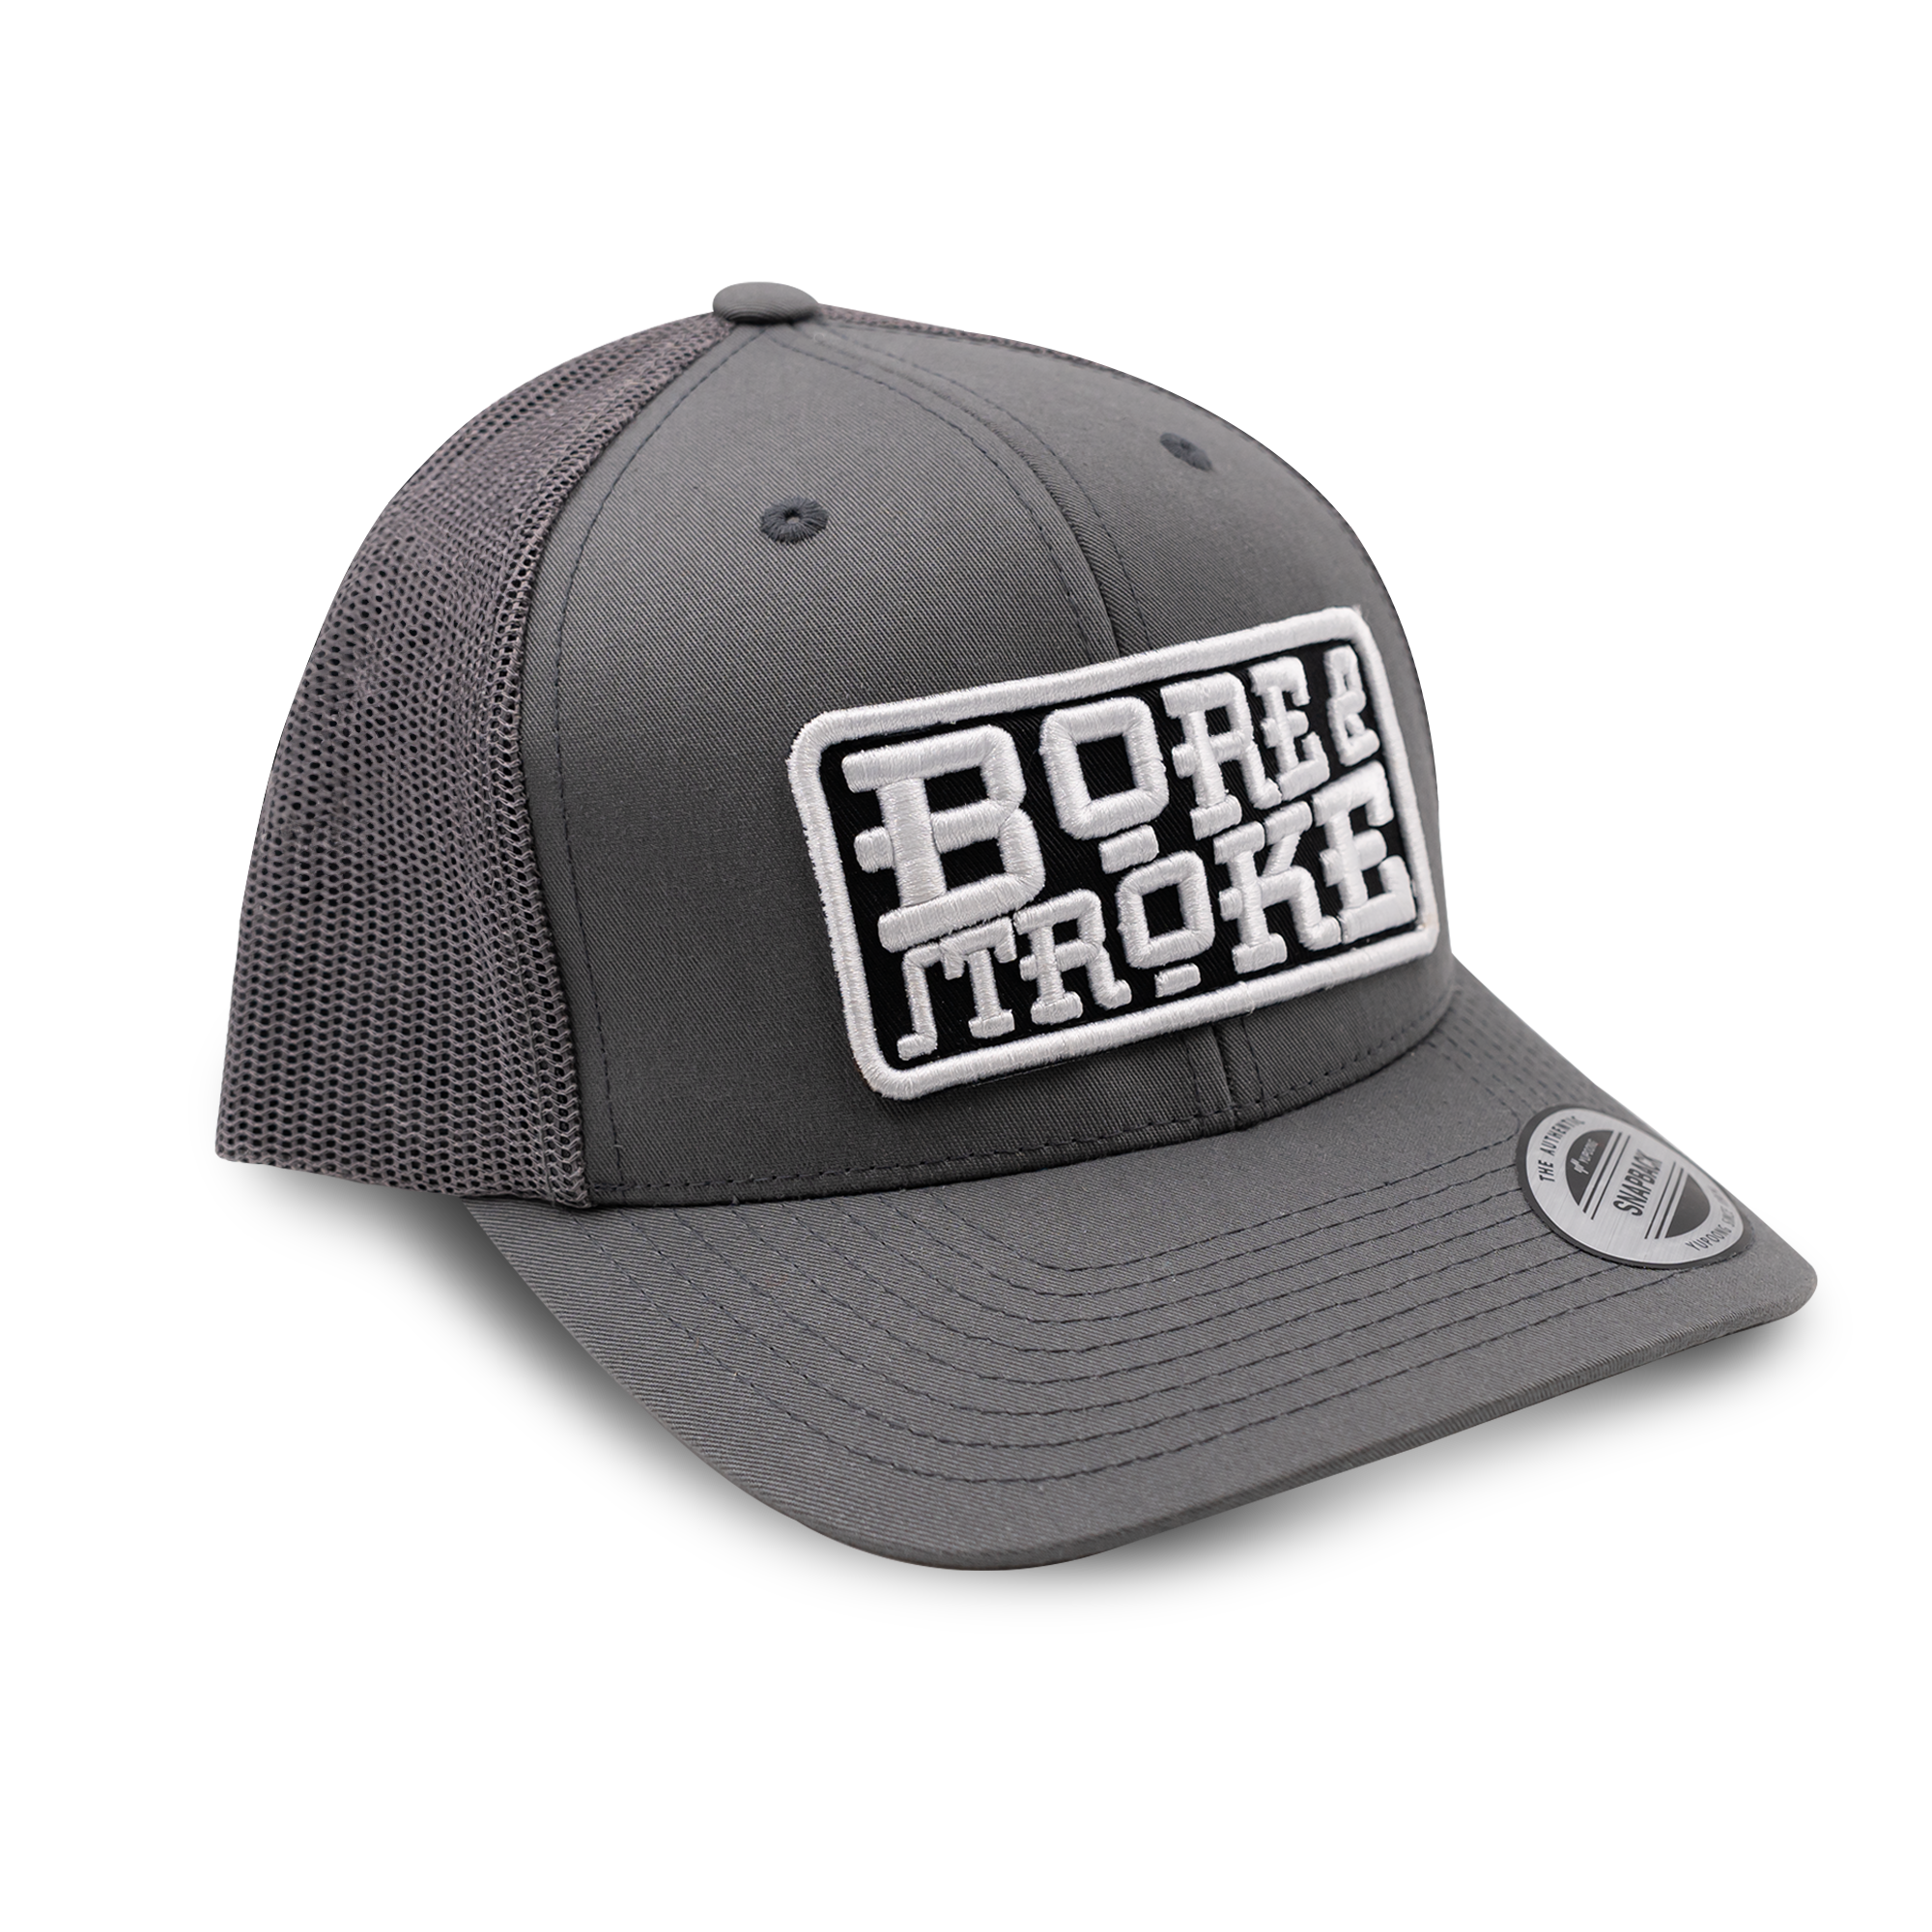 Bore & Stroke Trucker Caps - Grey